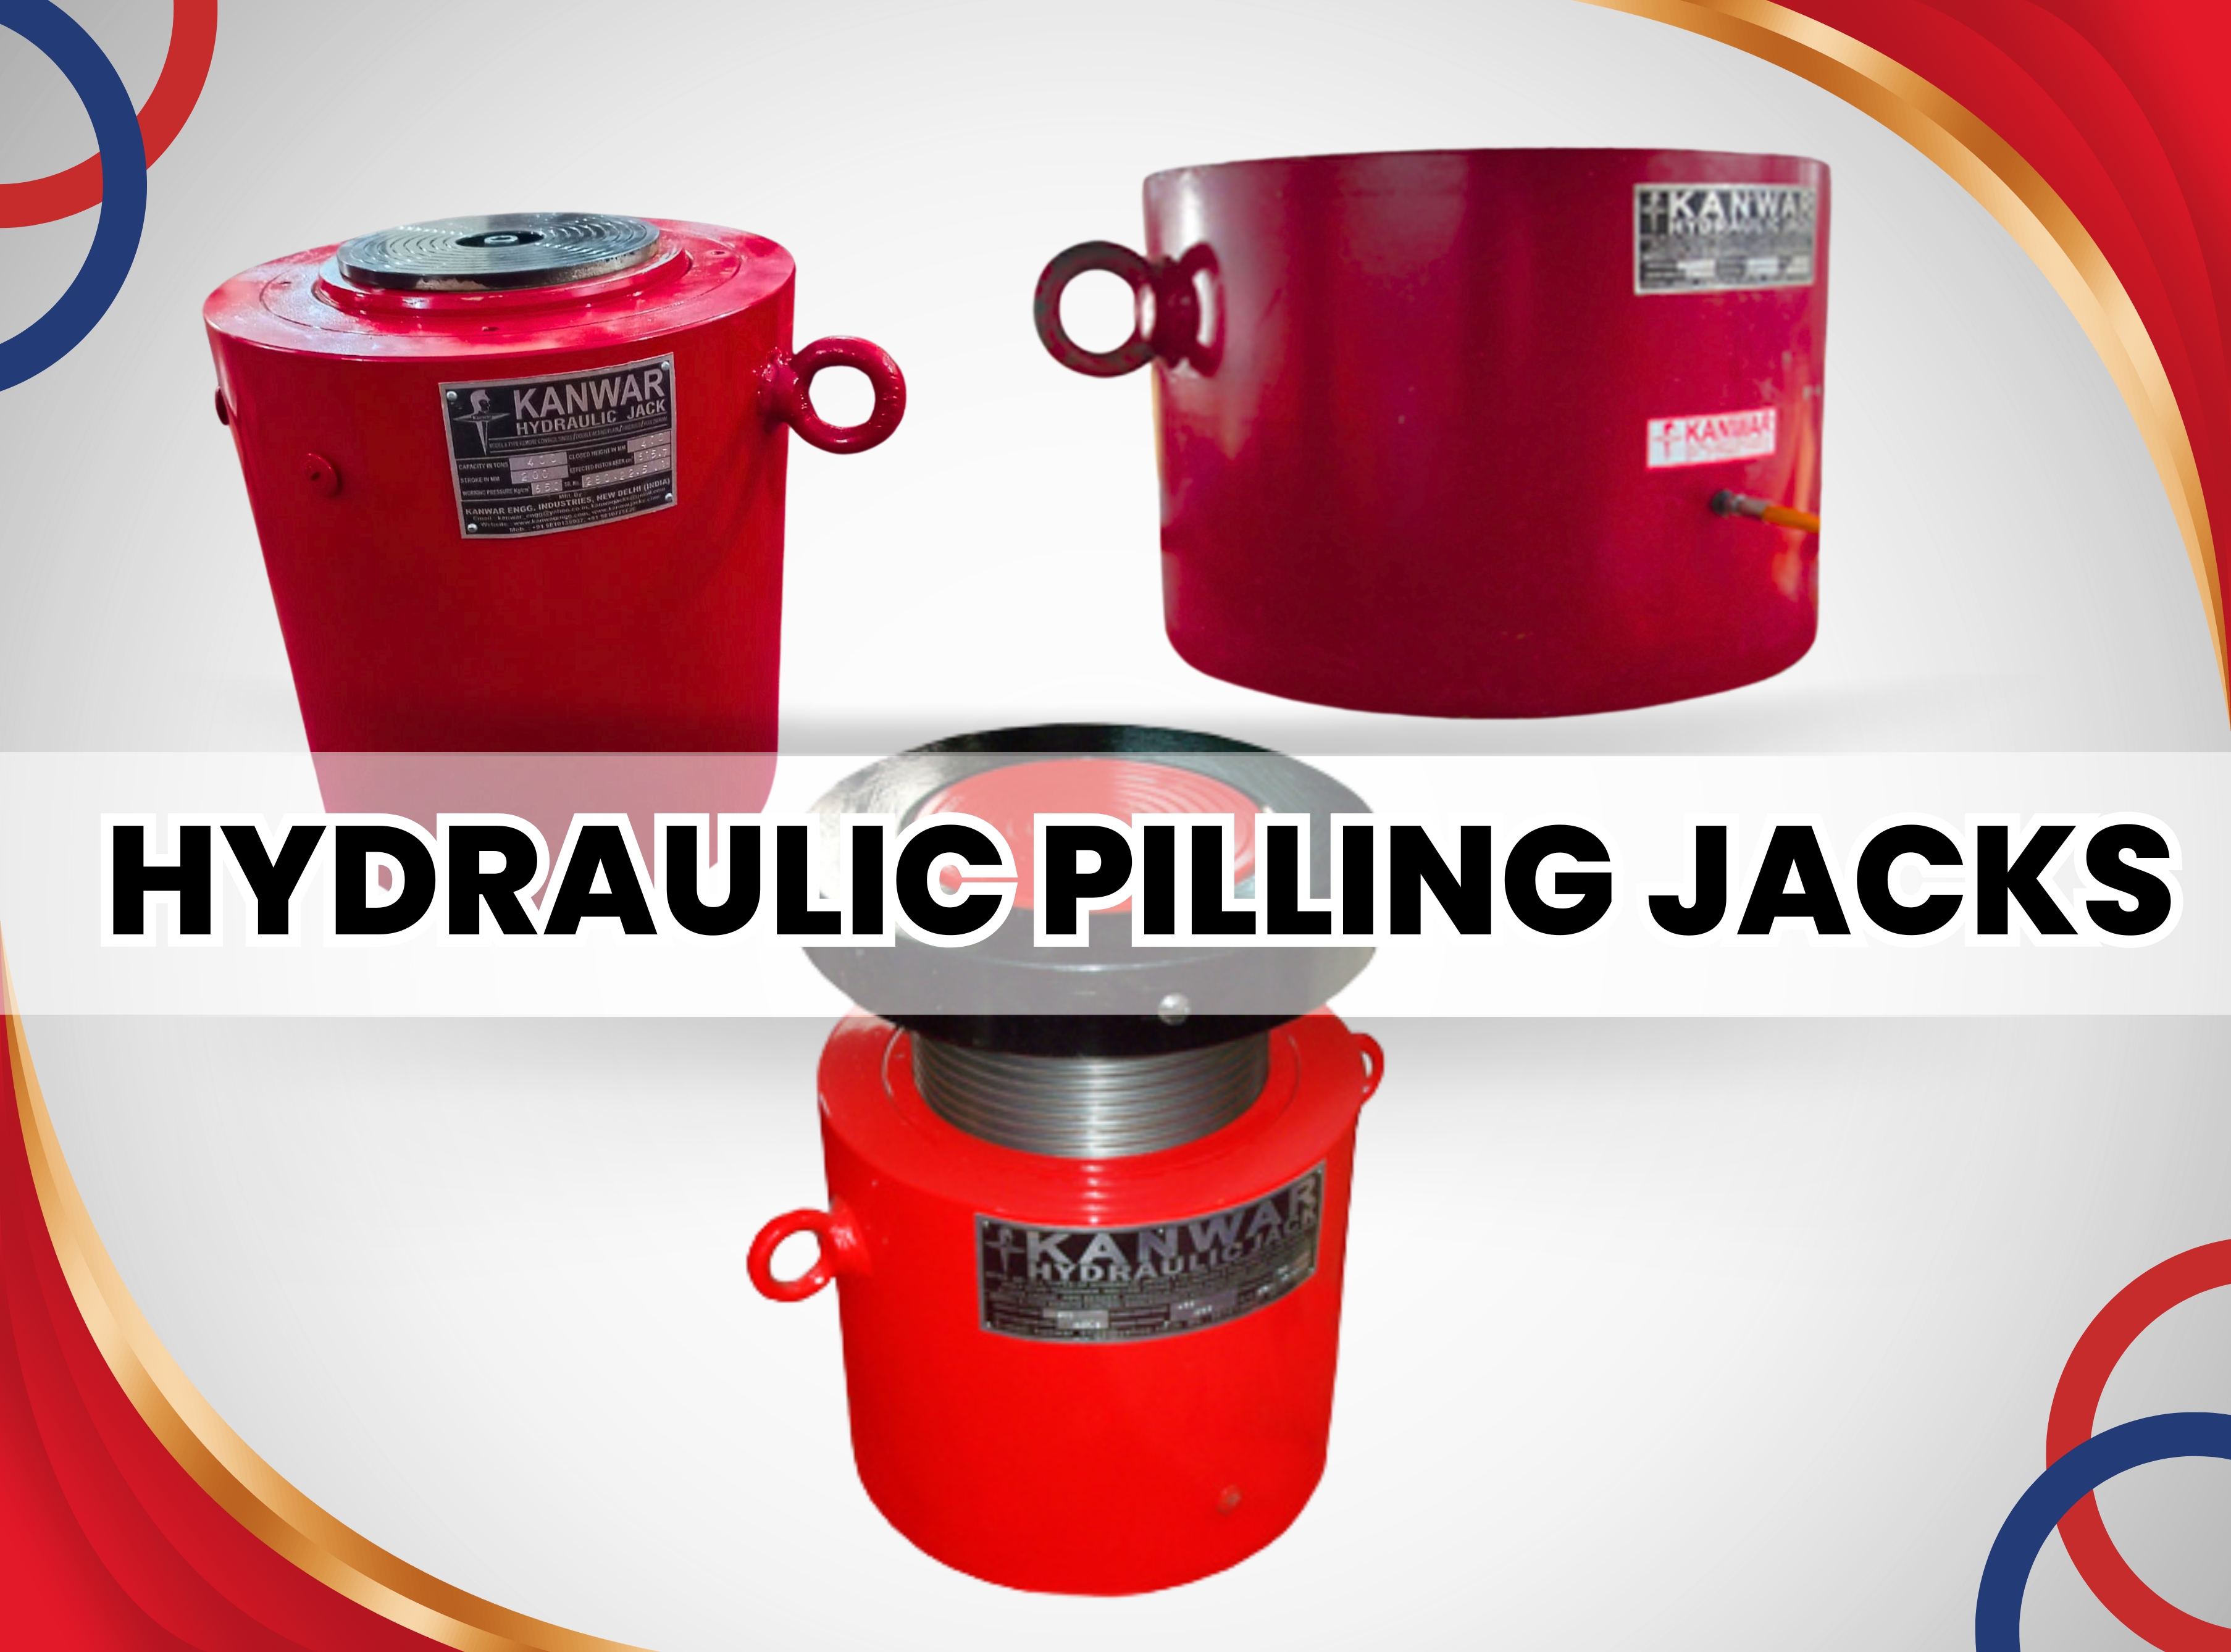 Hydraulic Pilling Jacks